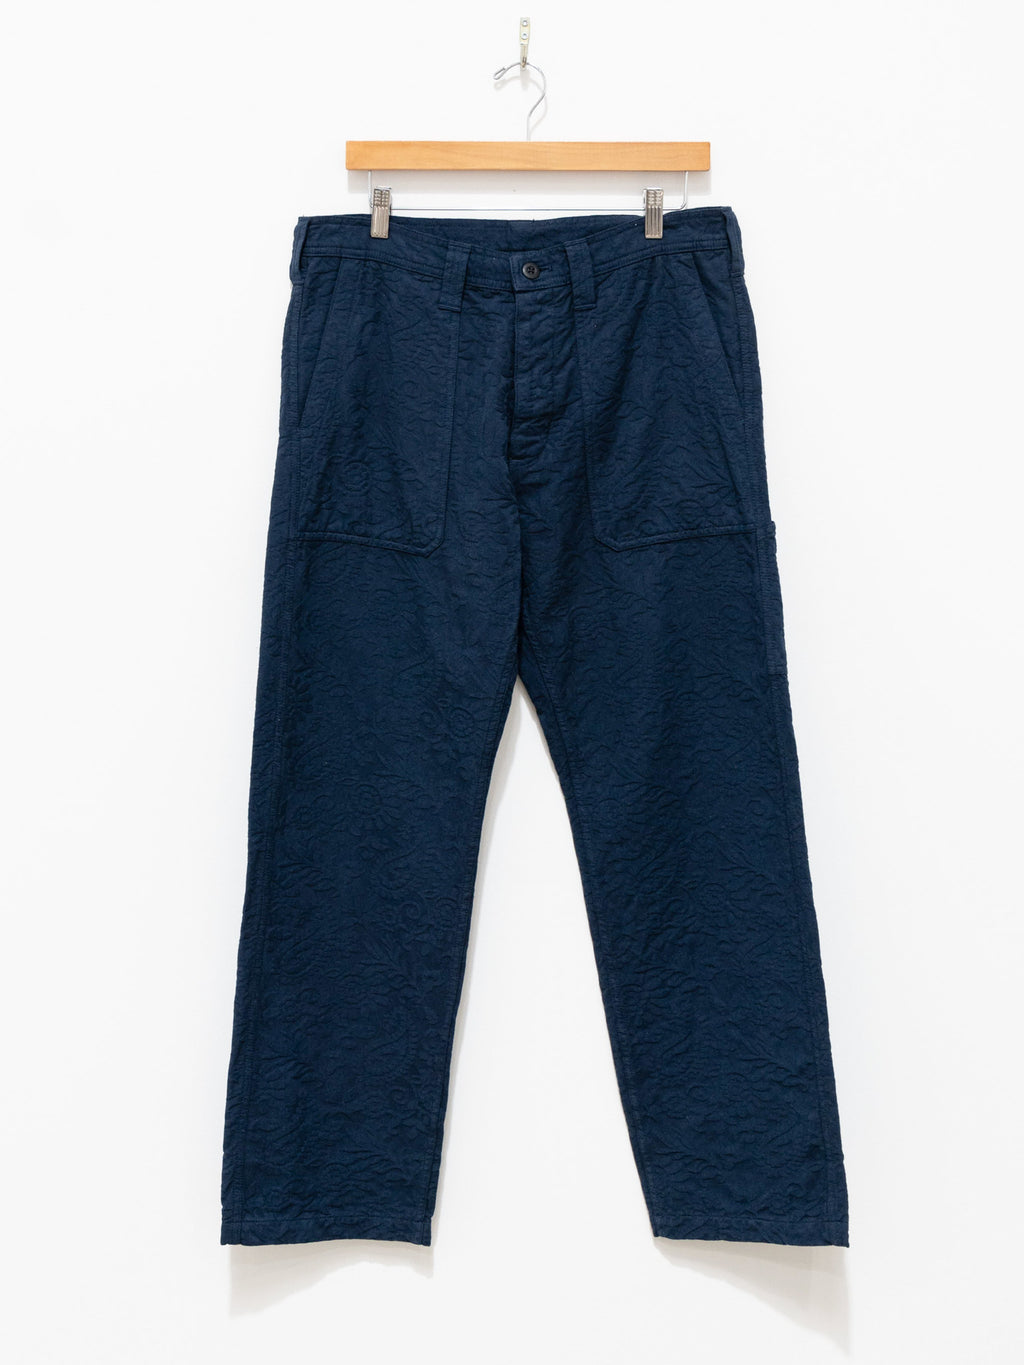 Namu Shop - ts(s) Garment Dye Paisley Fatigue Pants - Navy